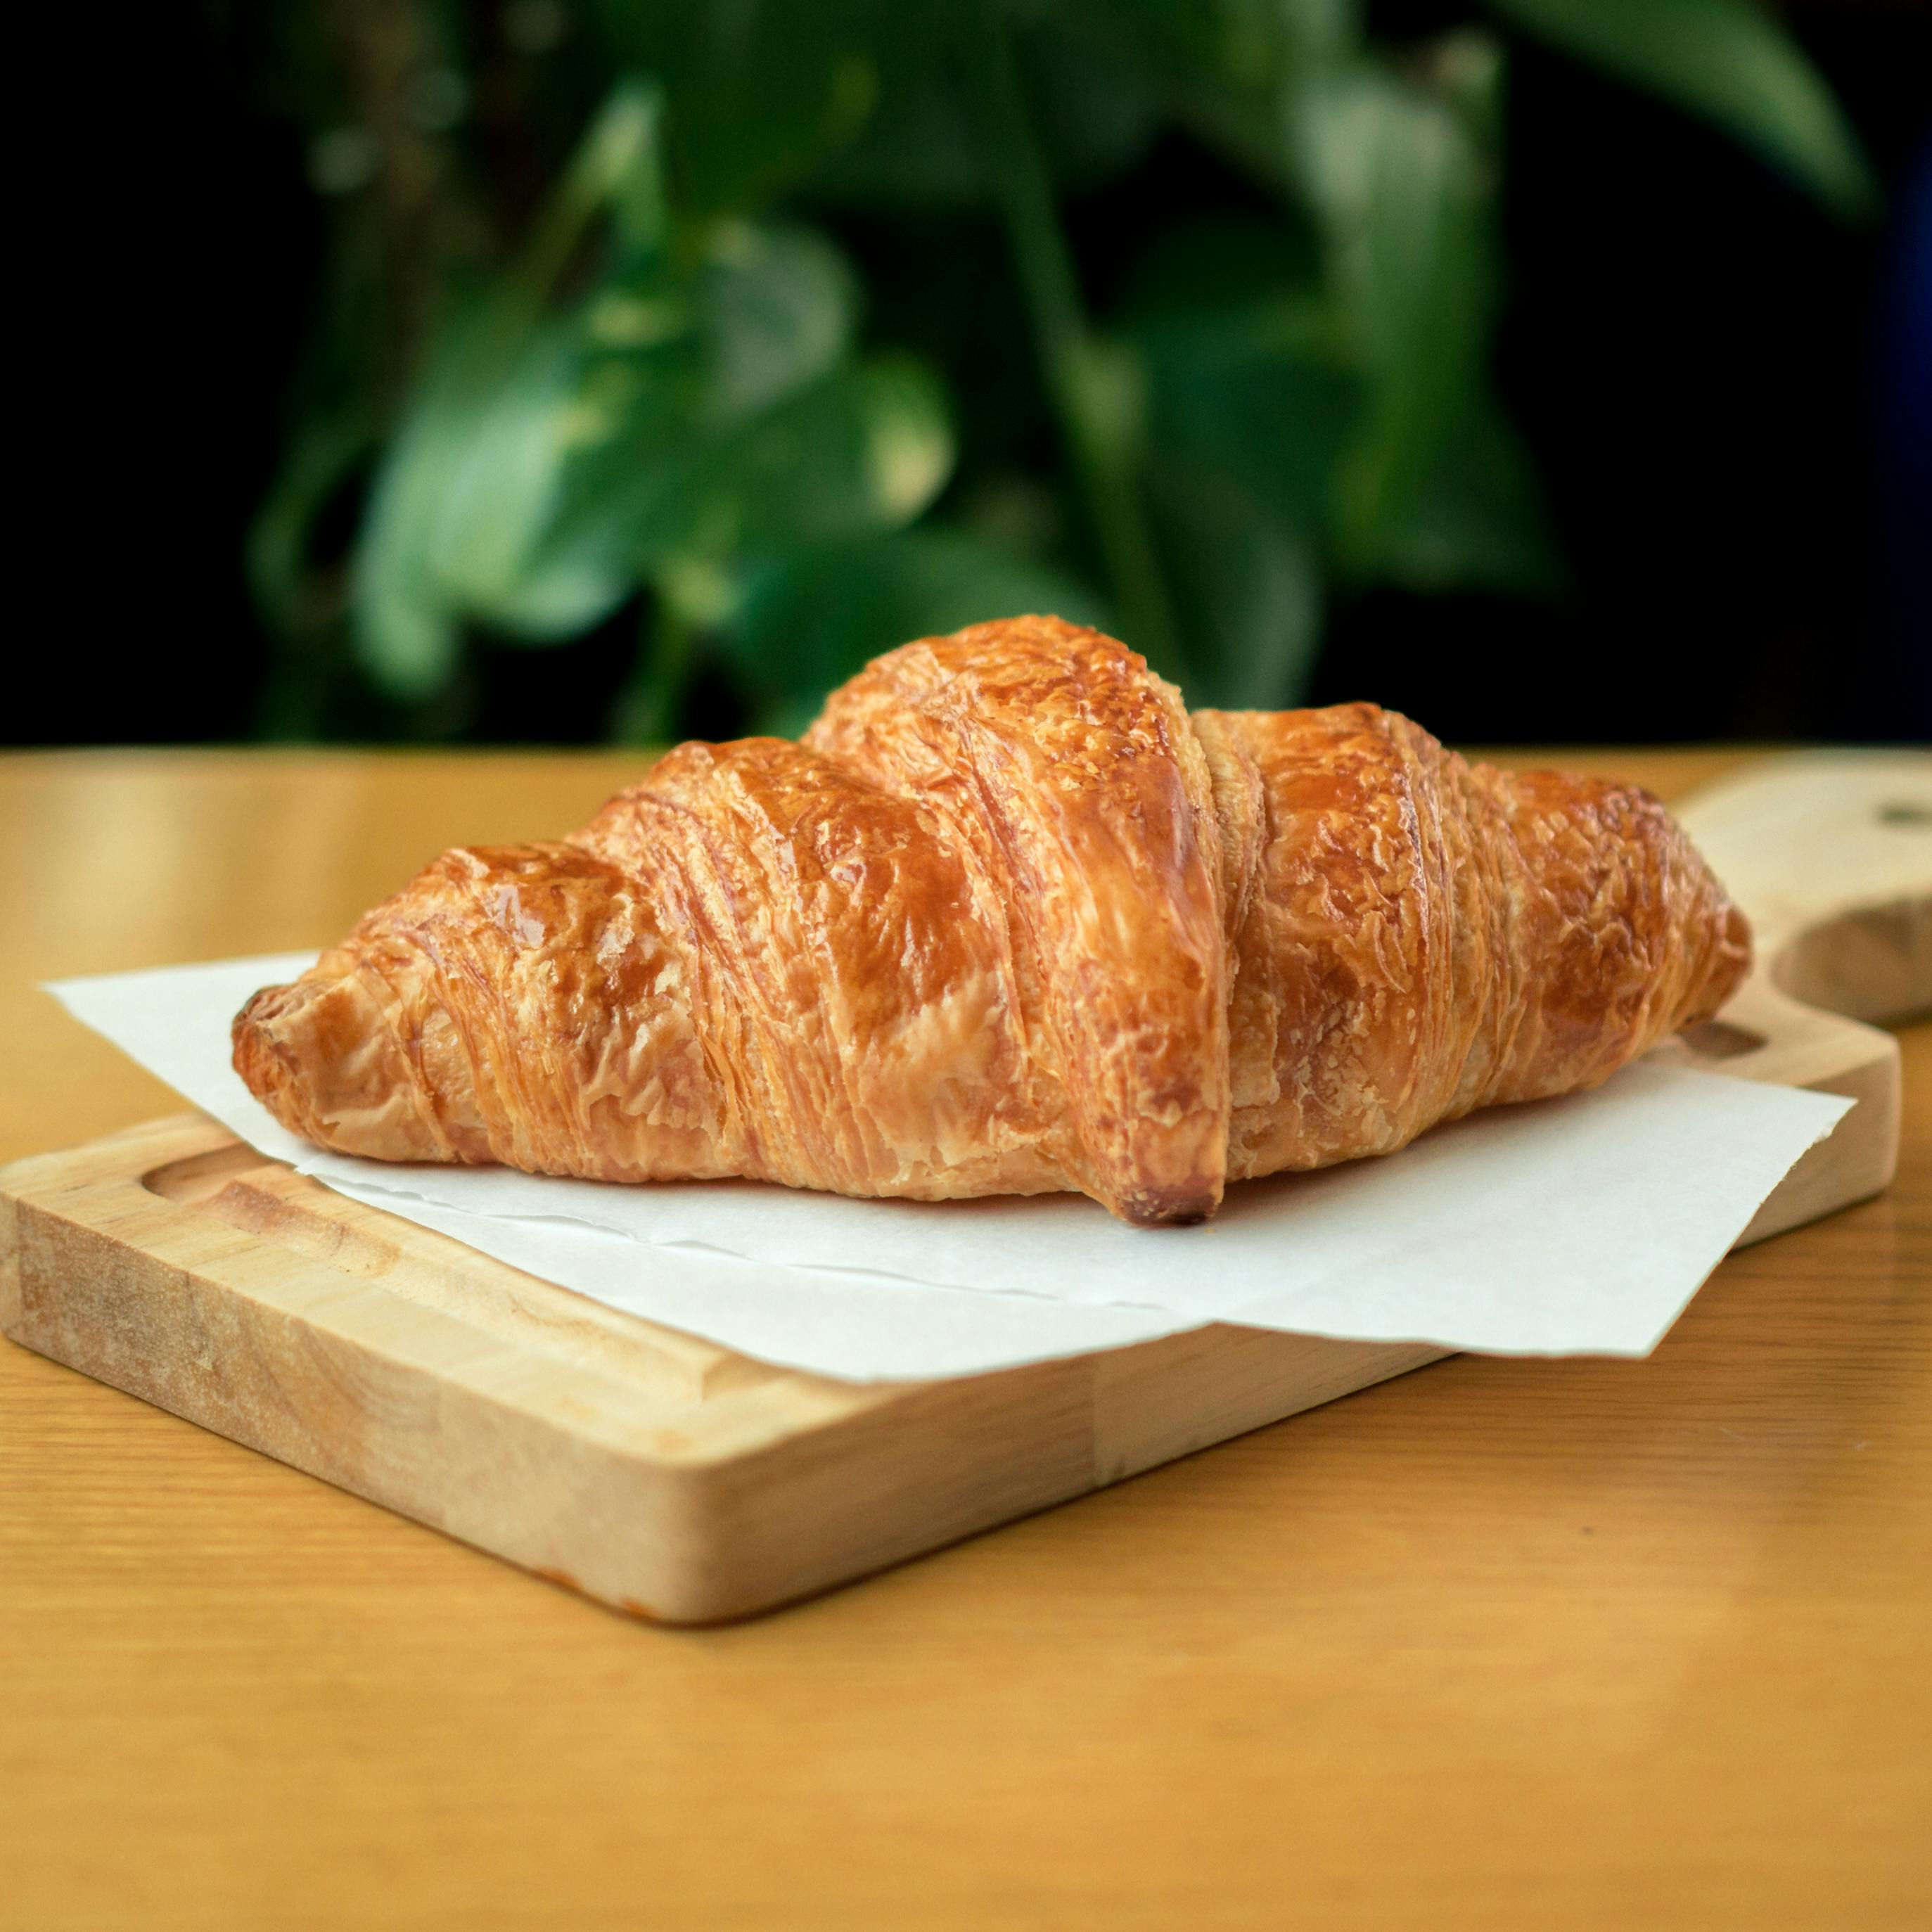 Close-Up Photo Of Croissant · Free Stock Photo